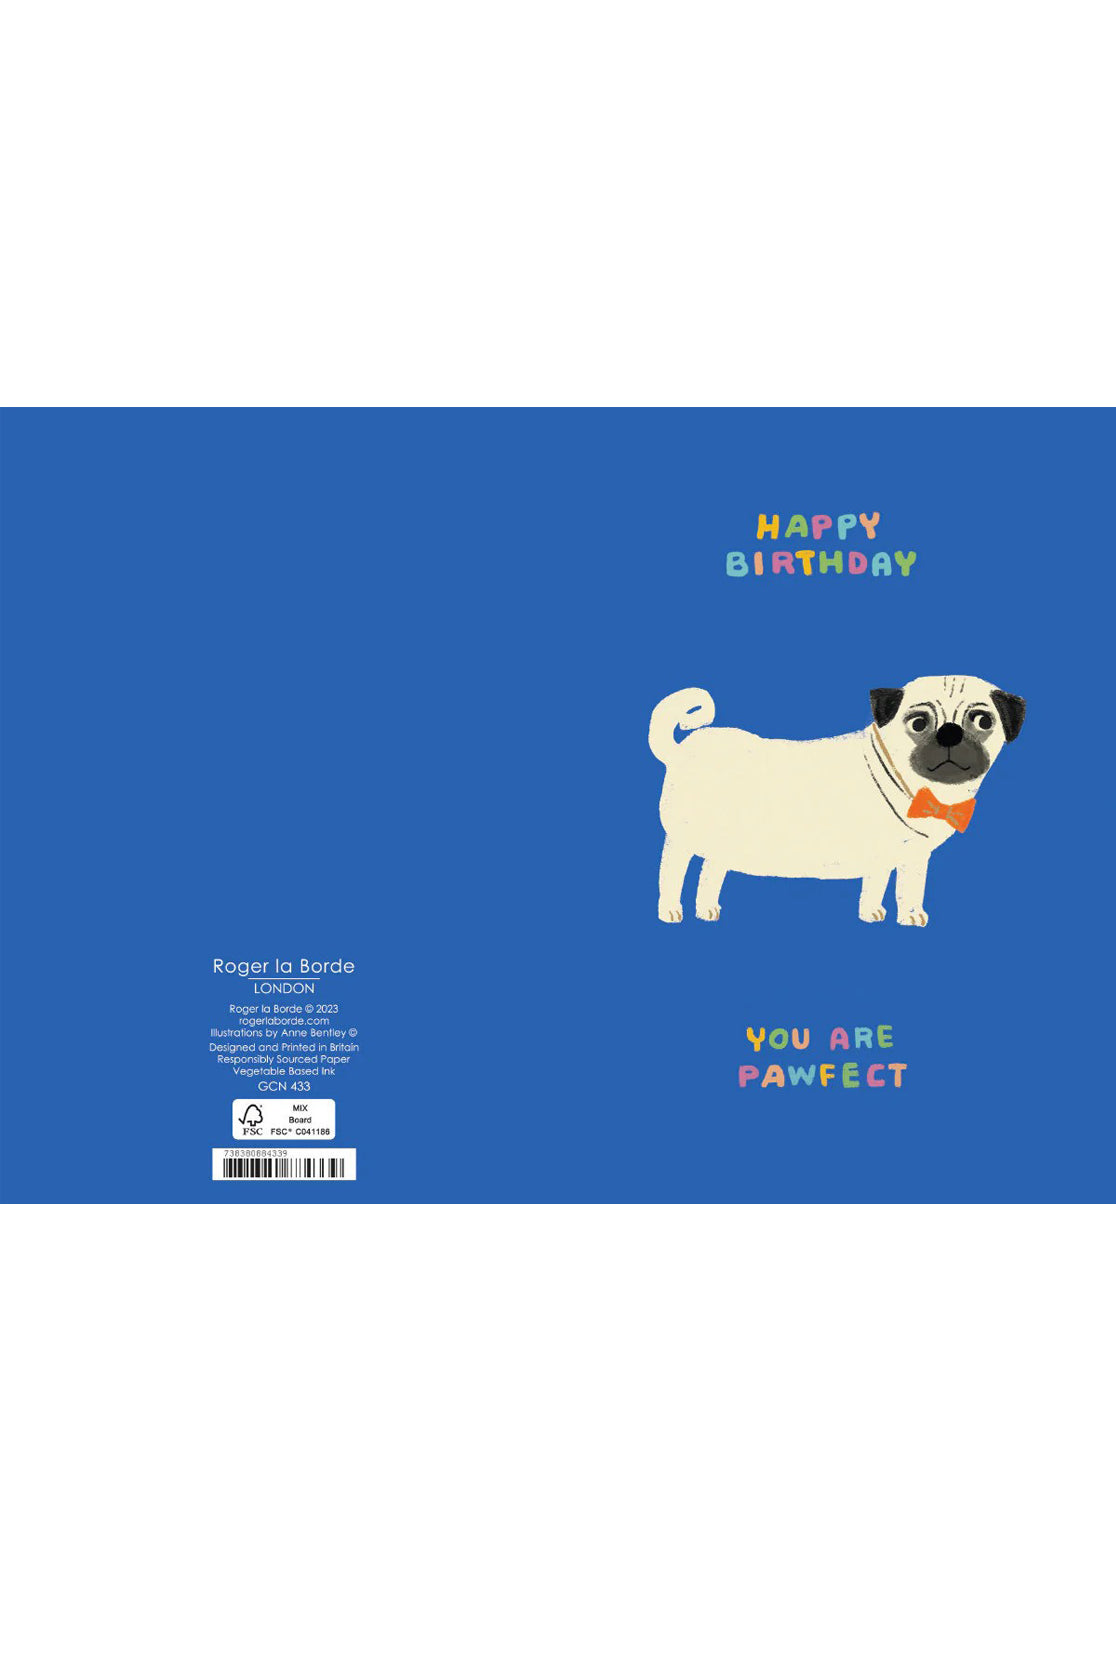 You Are Pawfect Pug Birthday Card